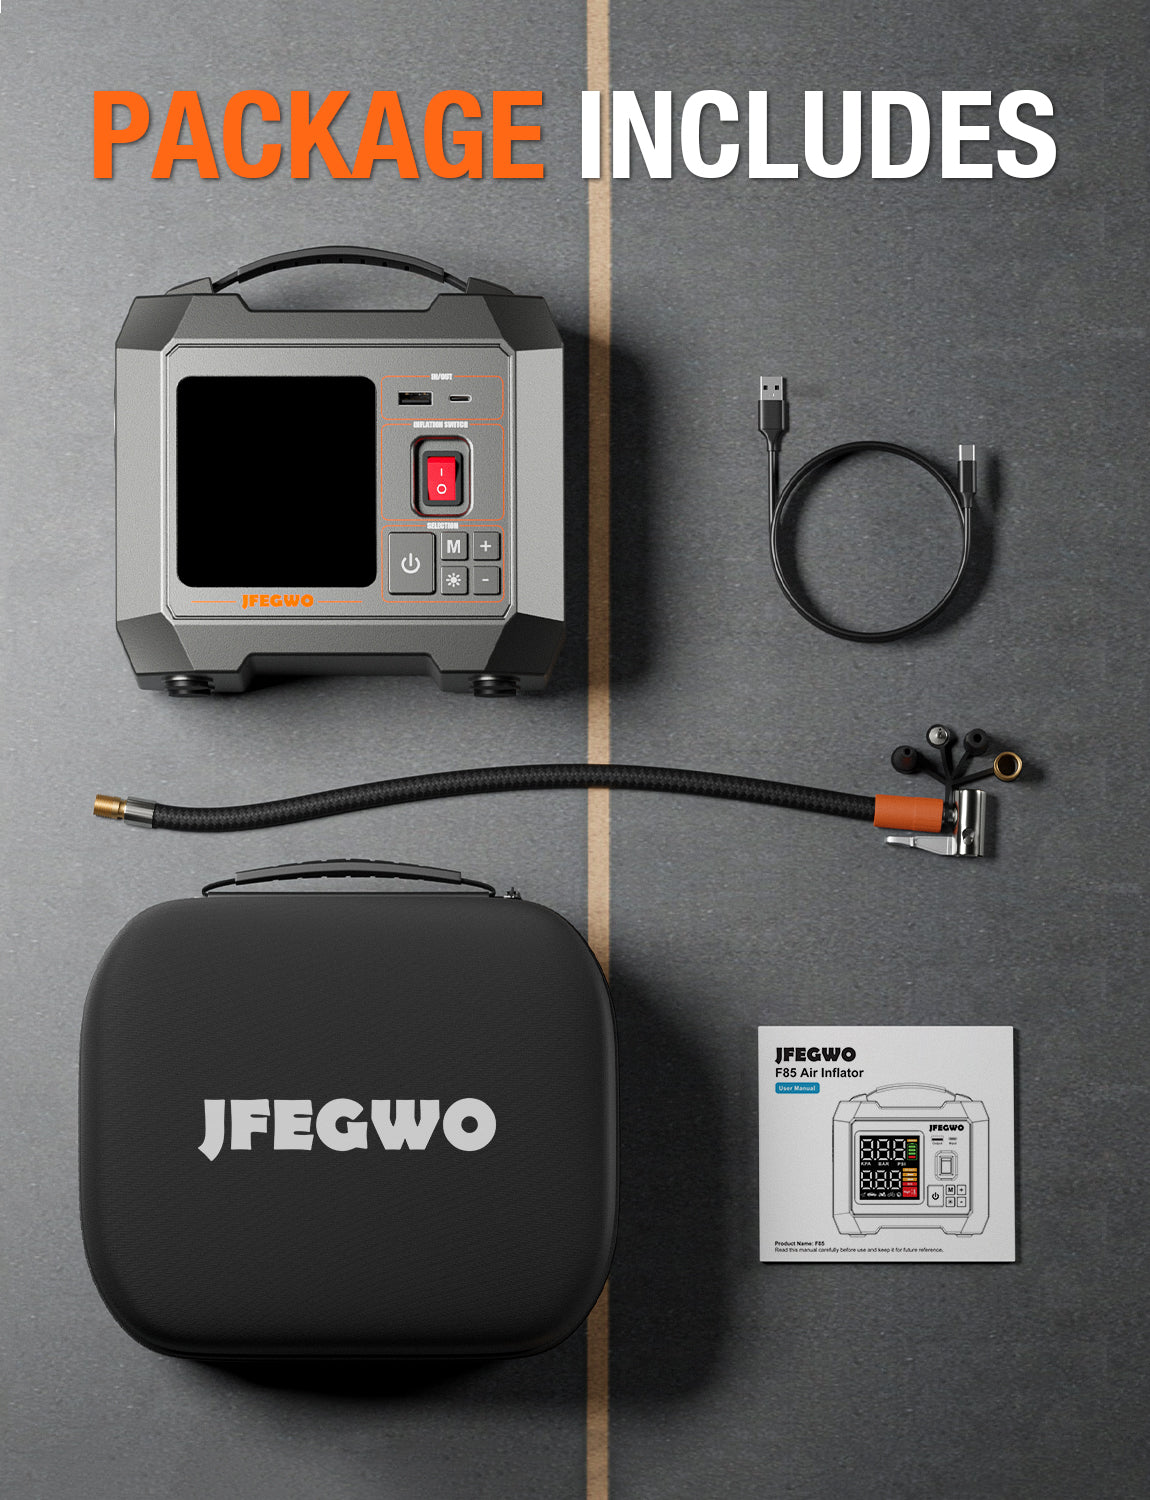 JF.EGWO JFEGWO Tire Inflator Portable Air compressor 300PSI Silver - JF.EGWO